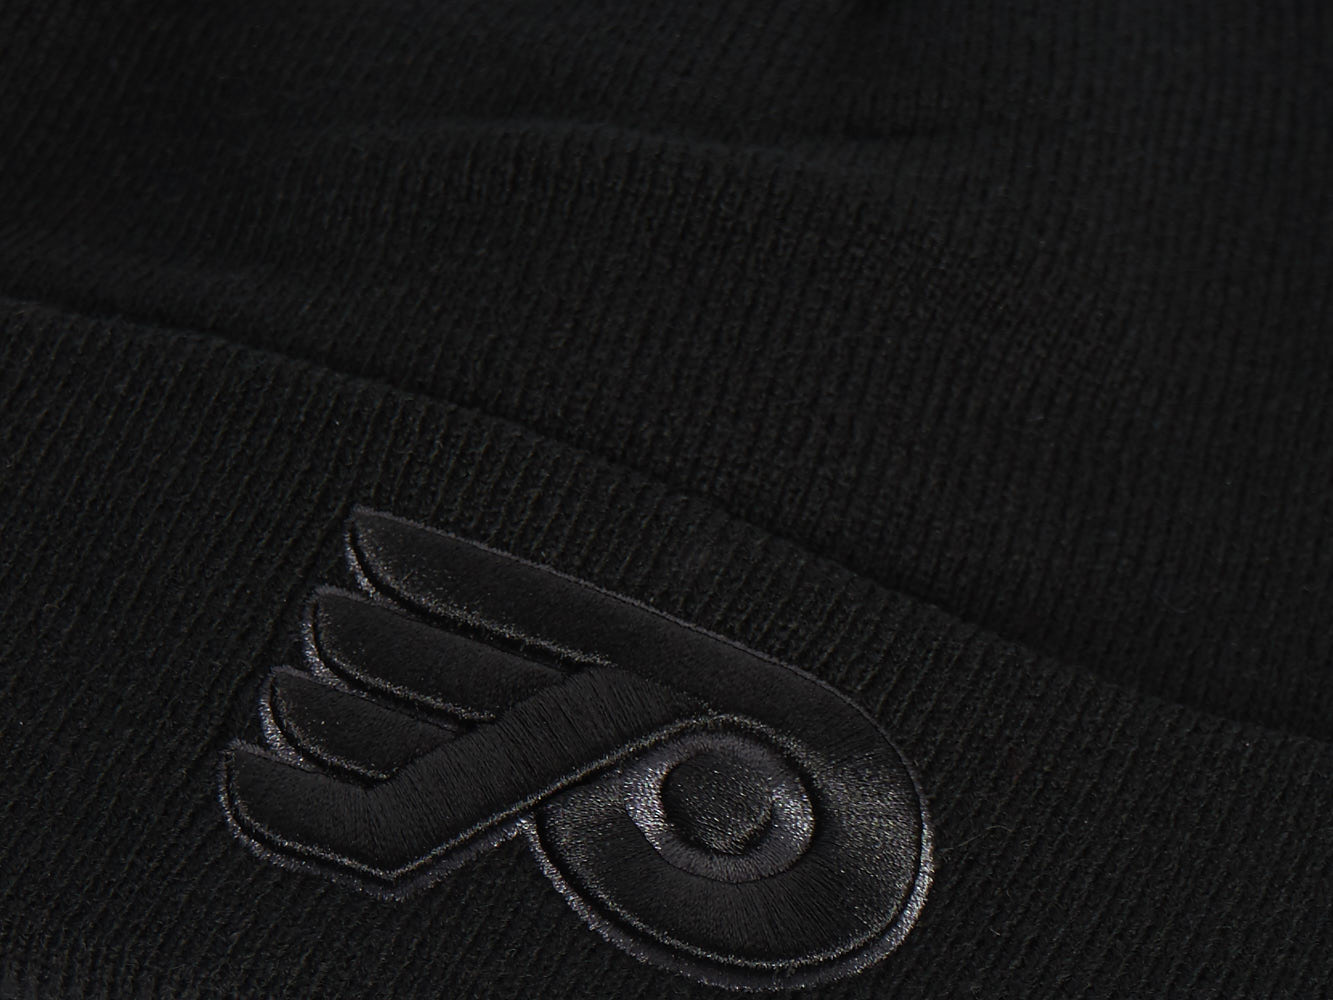 Шапка "NHL Philadelphia Flyers" с вышивкой черная